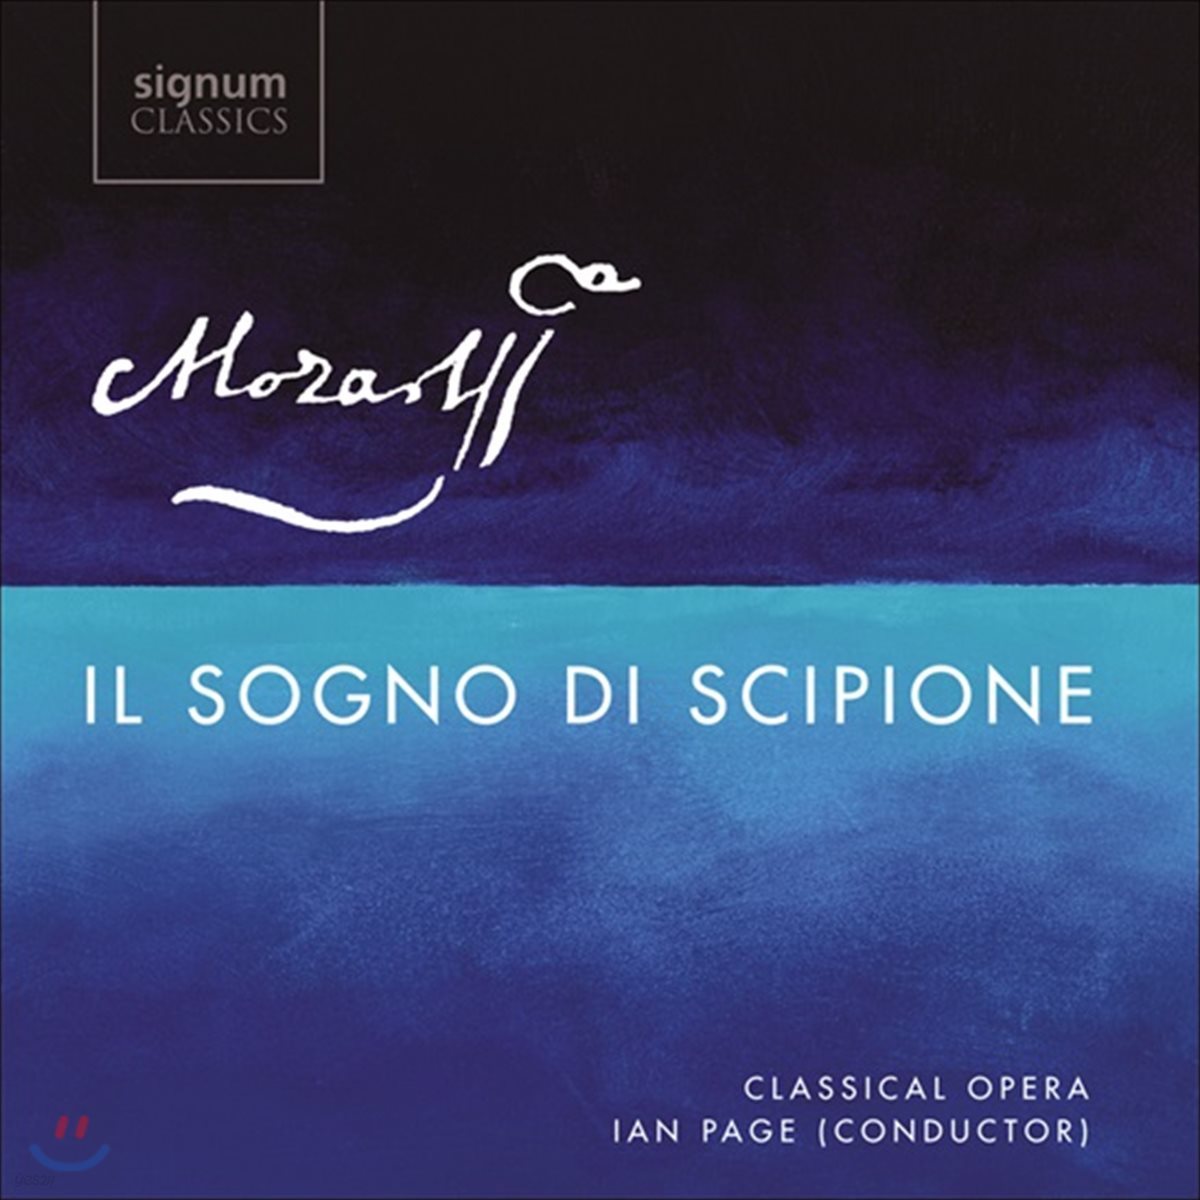 Classical Opera / Ian Page 모차르트: 오페라 '시피오네의 꿈' - 클래시컬 오페라, 이안 페이지 (Mozart: Il Sogno di Scipione, K126)